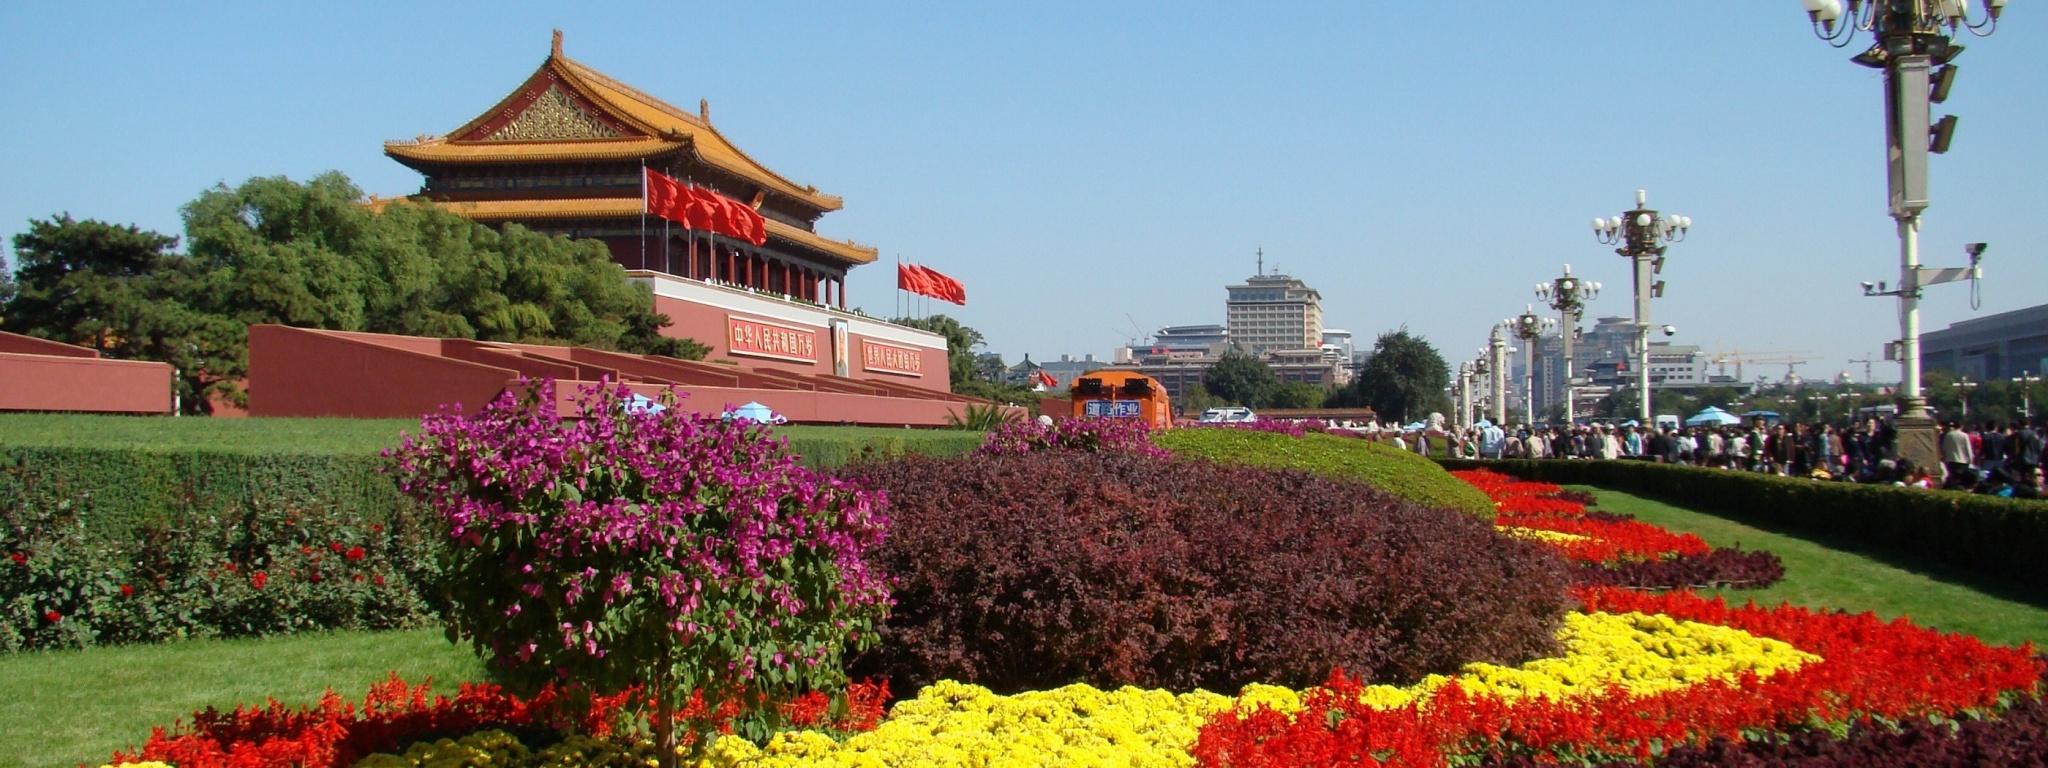 City Landscape Tiananmen Beijing China